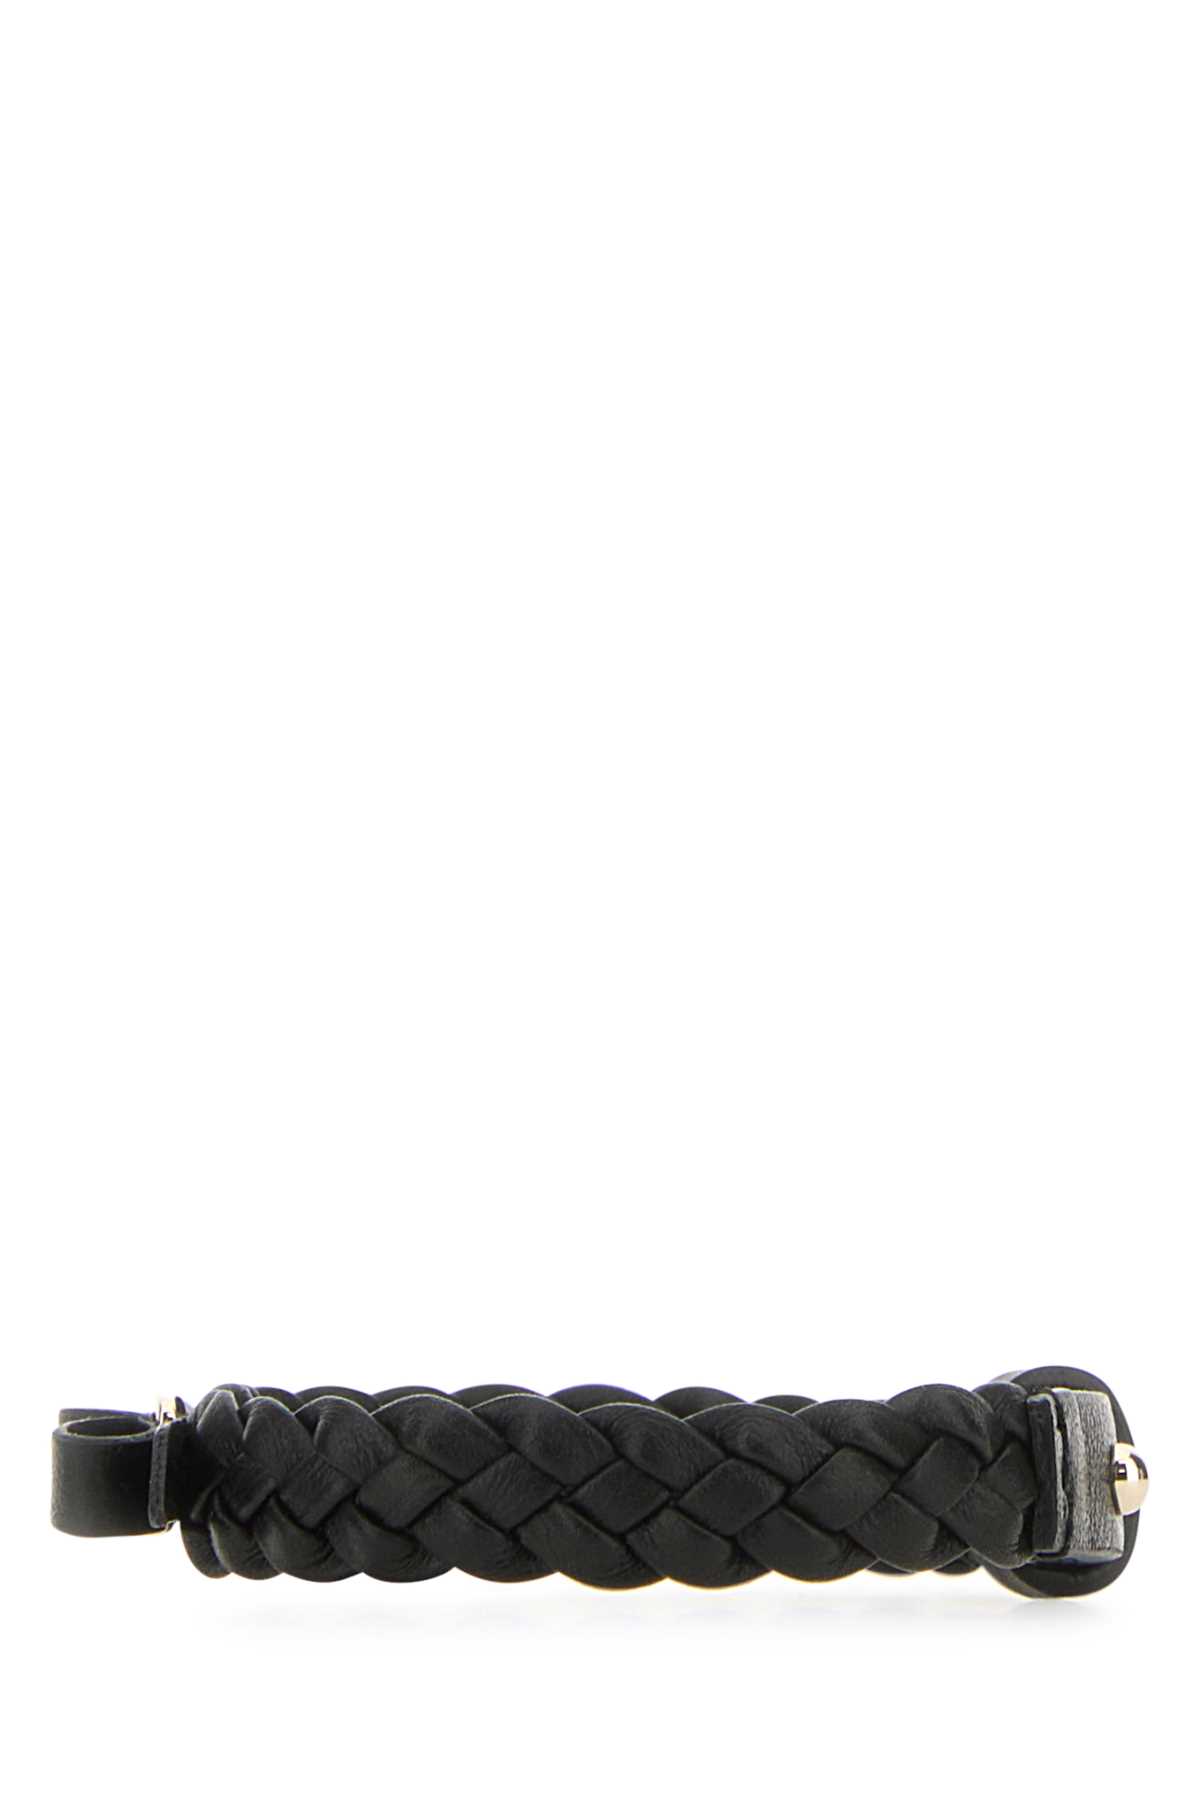 Shop Ferragamo Black Leather Vara Bracelet In Nerooro